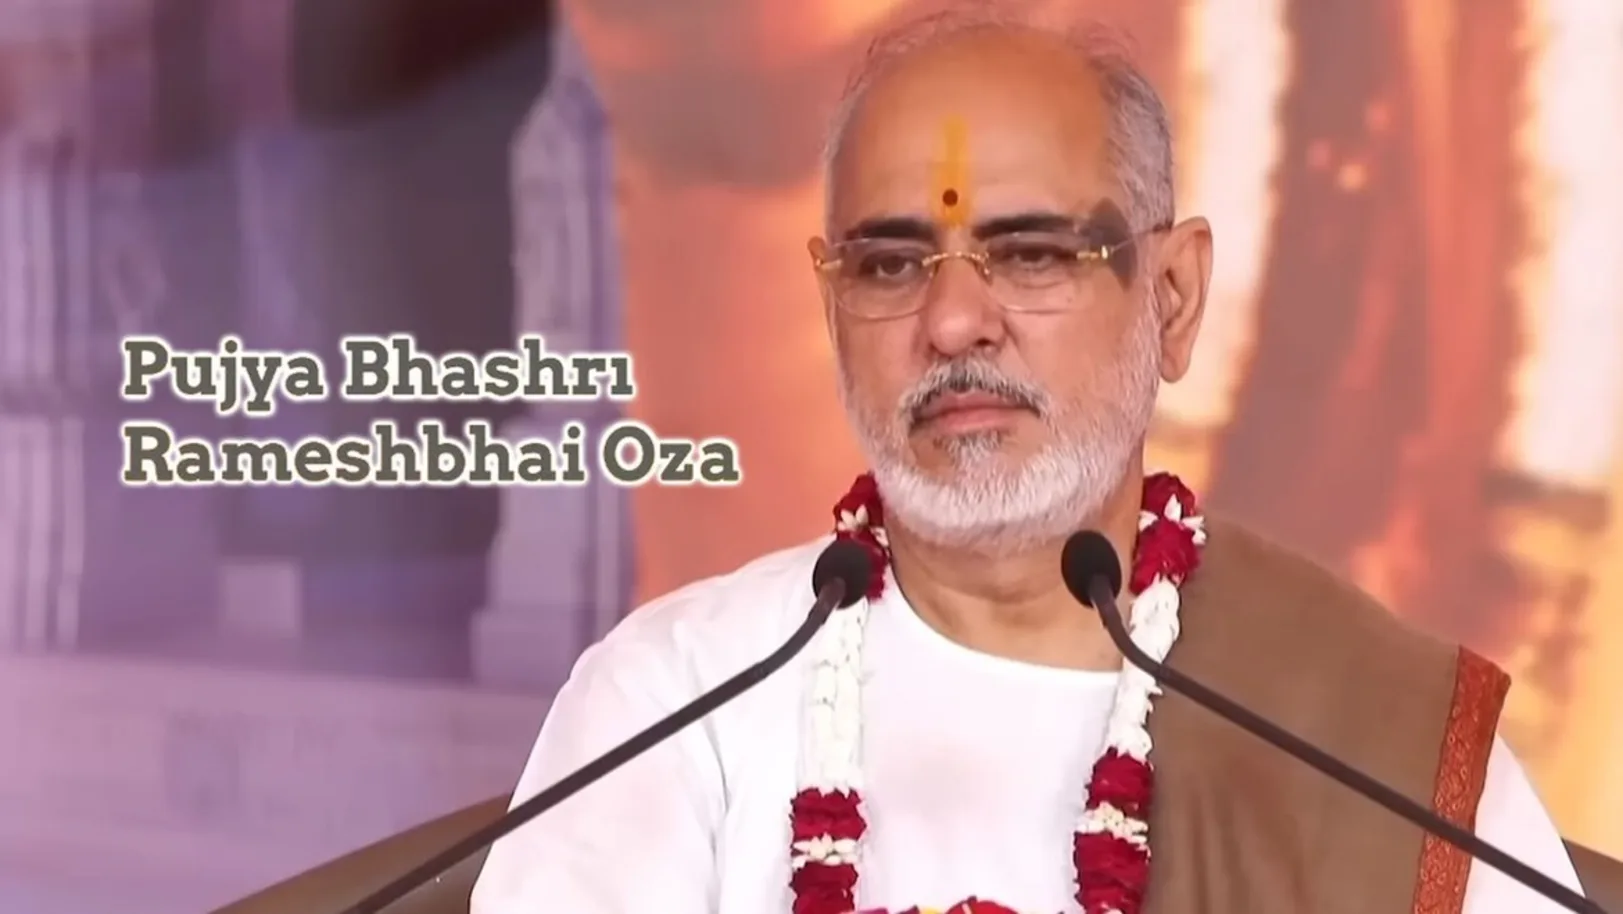 Pujya Bhaishri Rameshbhai Oza Live Streaming Now On Dharm Sandesh